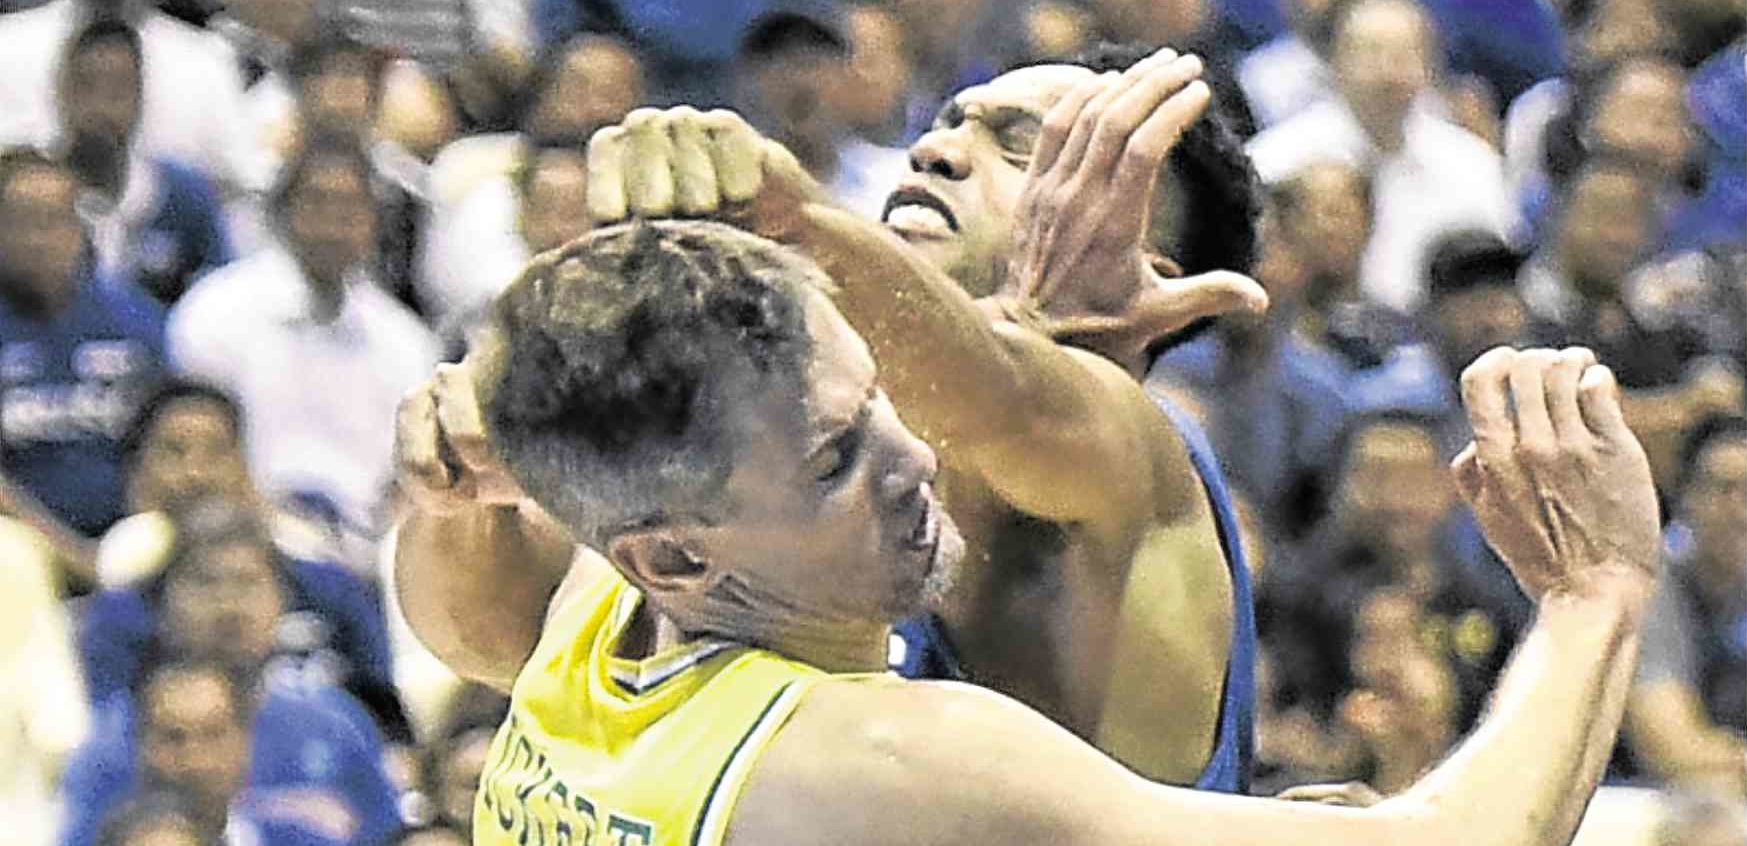 Black eye | Inquirer Sports